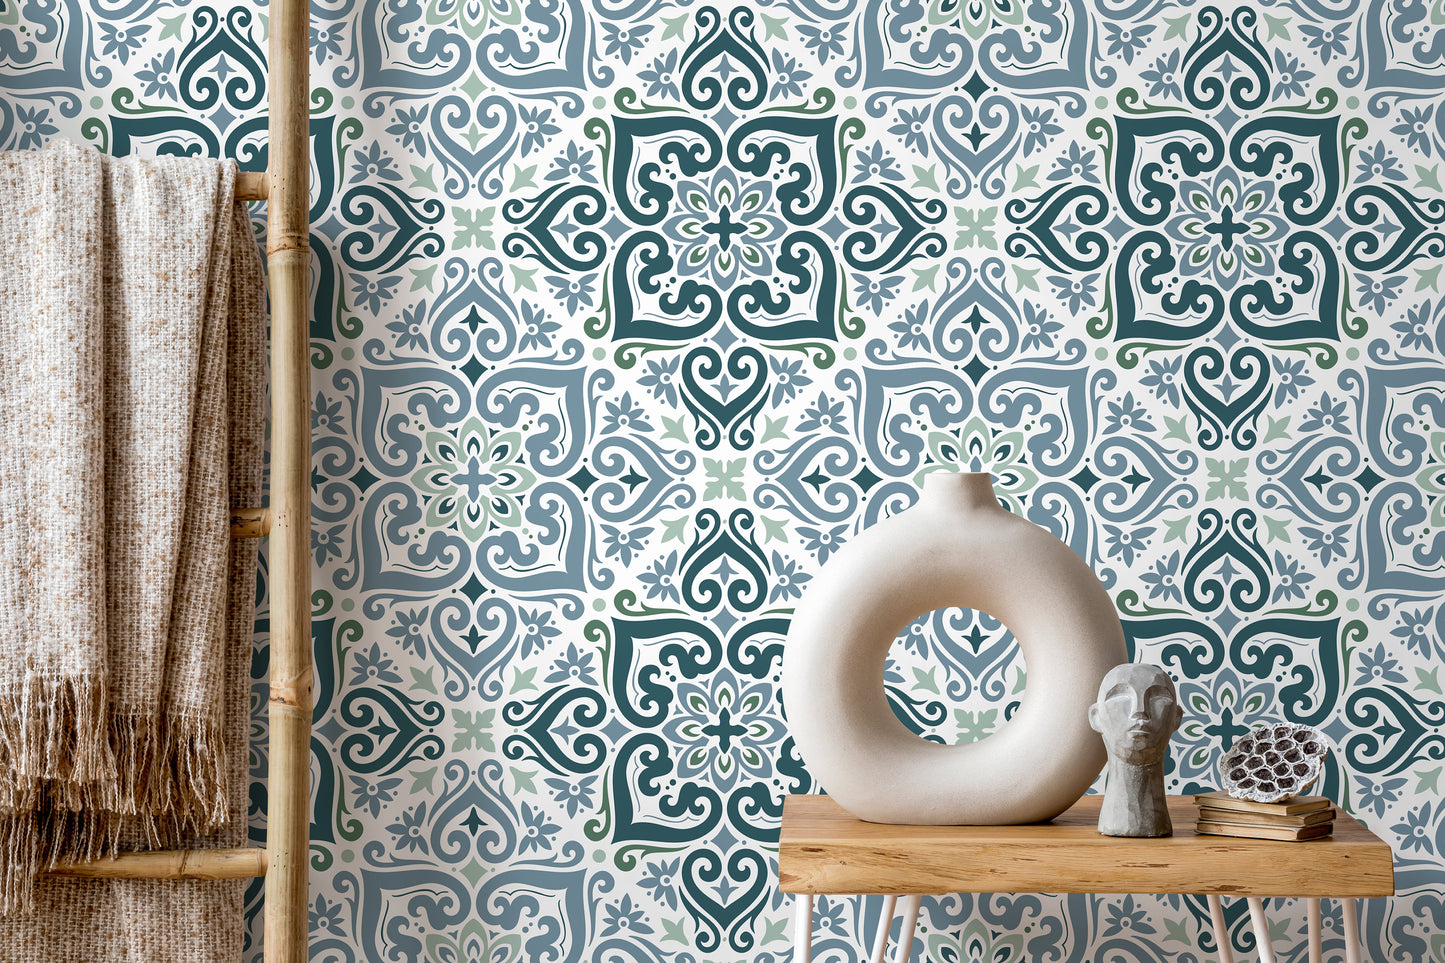 Moroccan Tile Wallpaper / Peel and Stick Wallpaper Removable Wallpaper Home Decor Wall Art Wall Decor Room Decor - D163